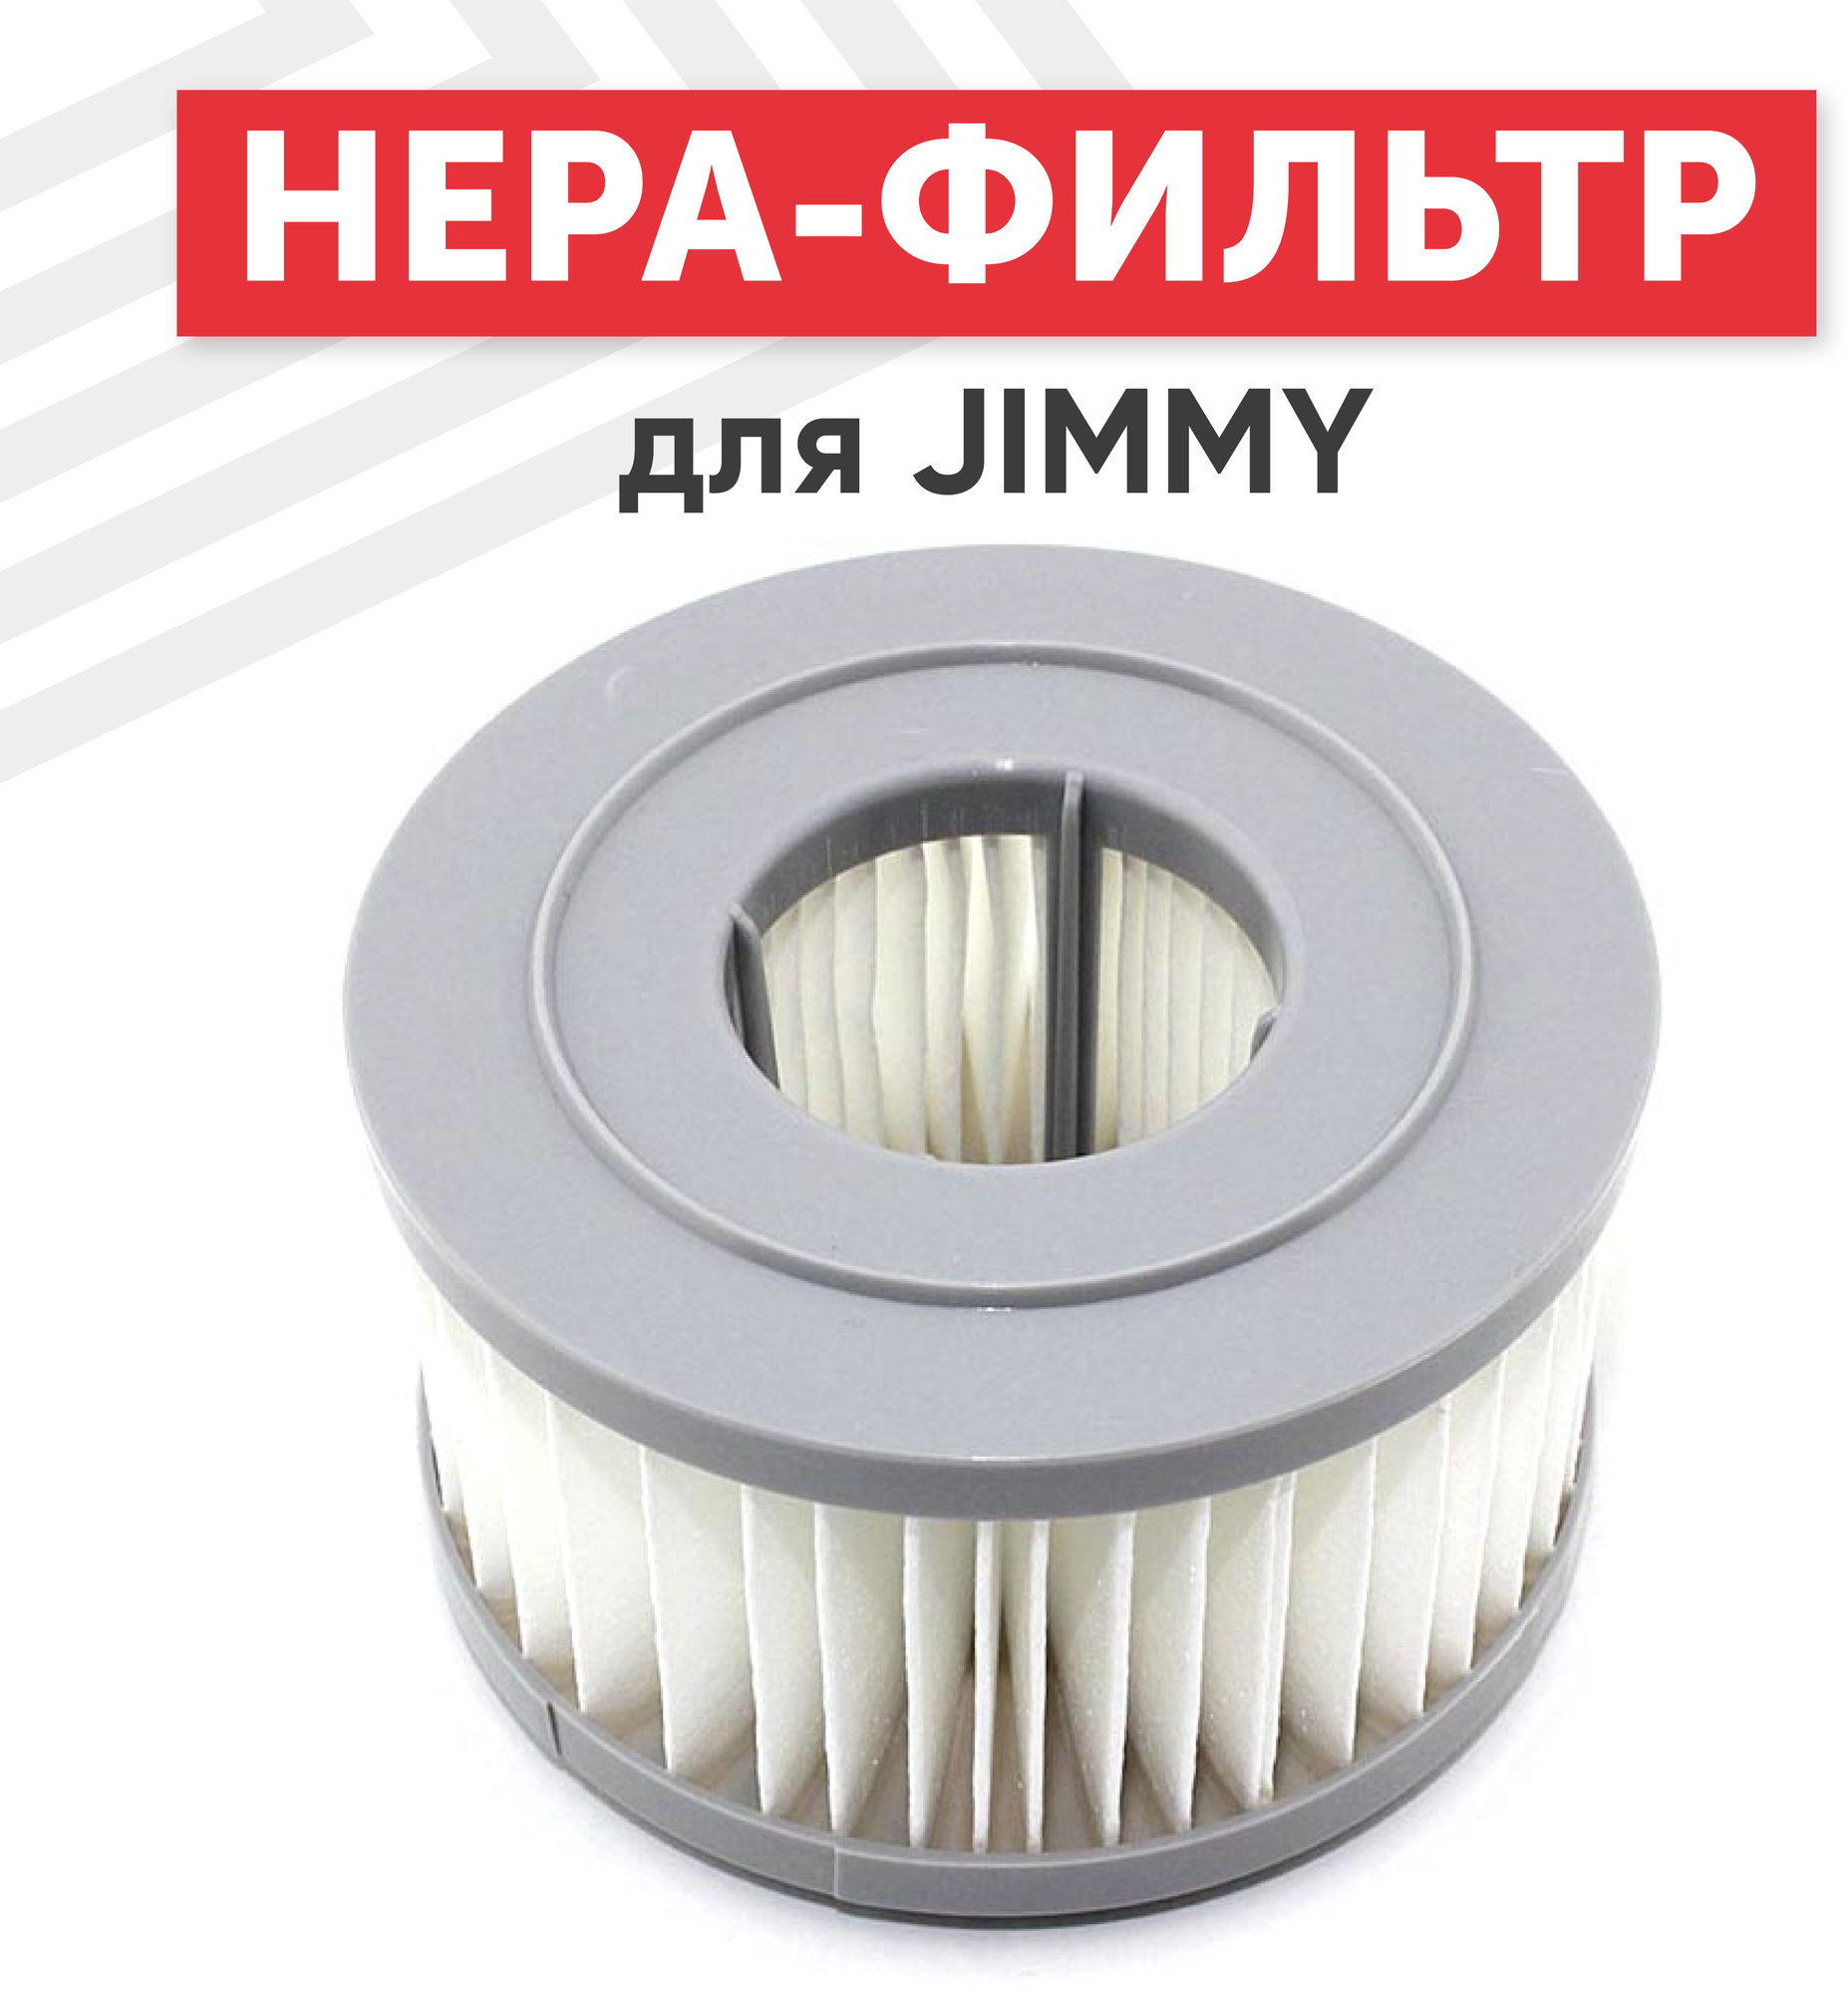 HEPA фильтр для пылесоса Jimmy JV85, JV85 Pro, H9 Pro Handheld Wireless Vacuum Cleaner